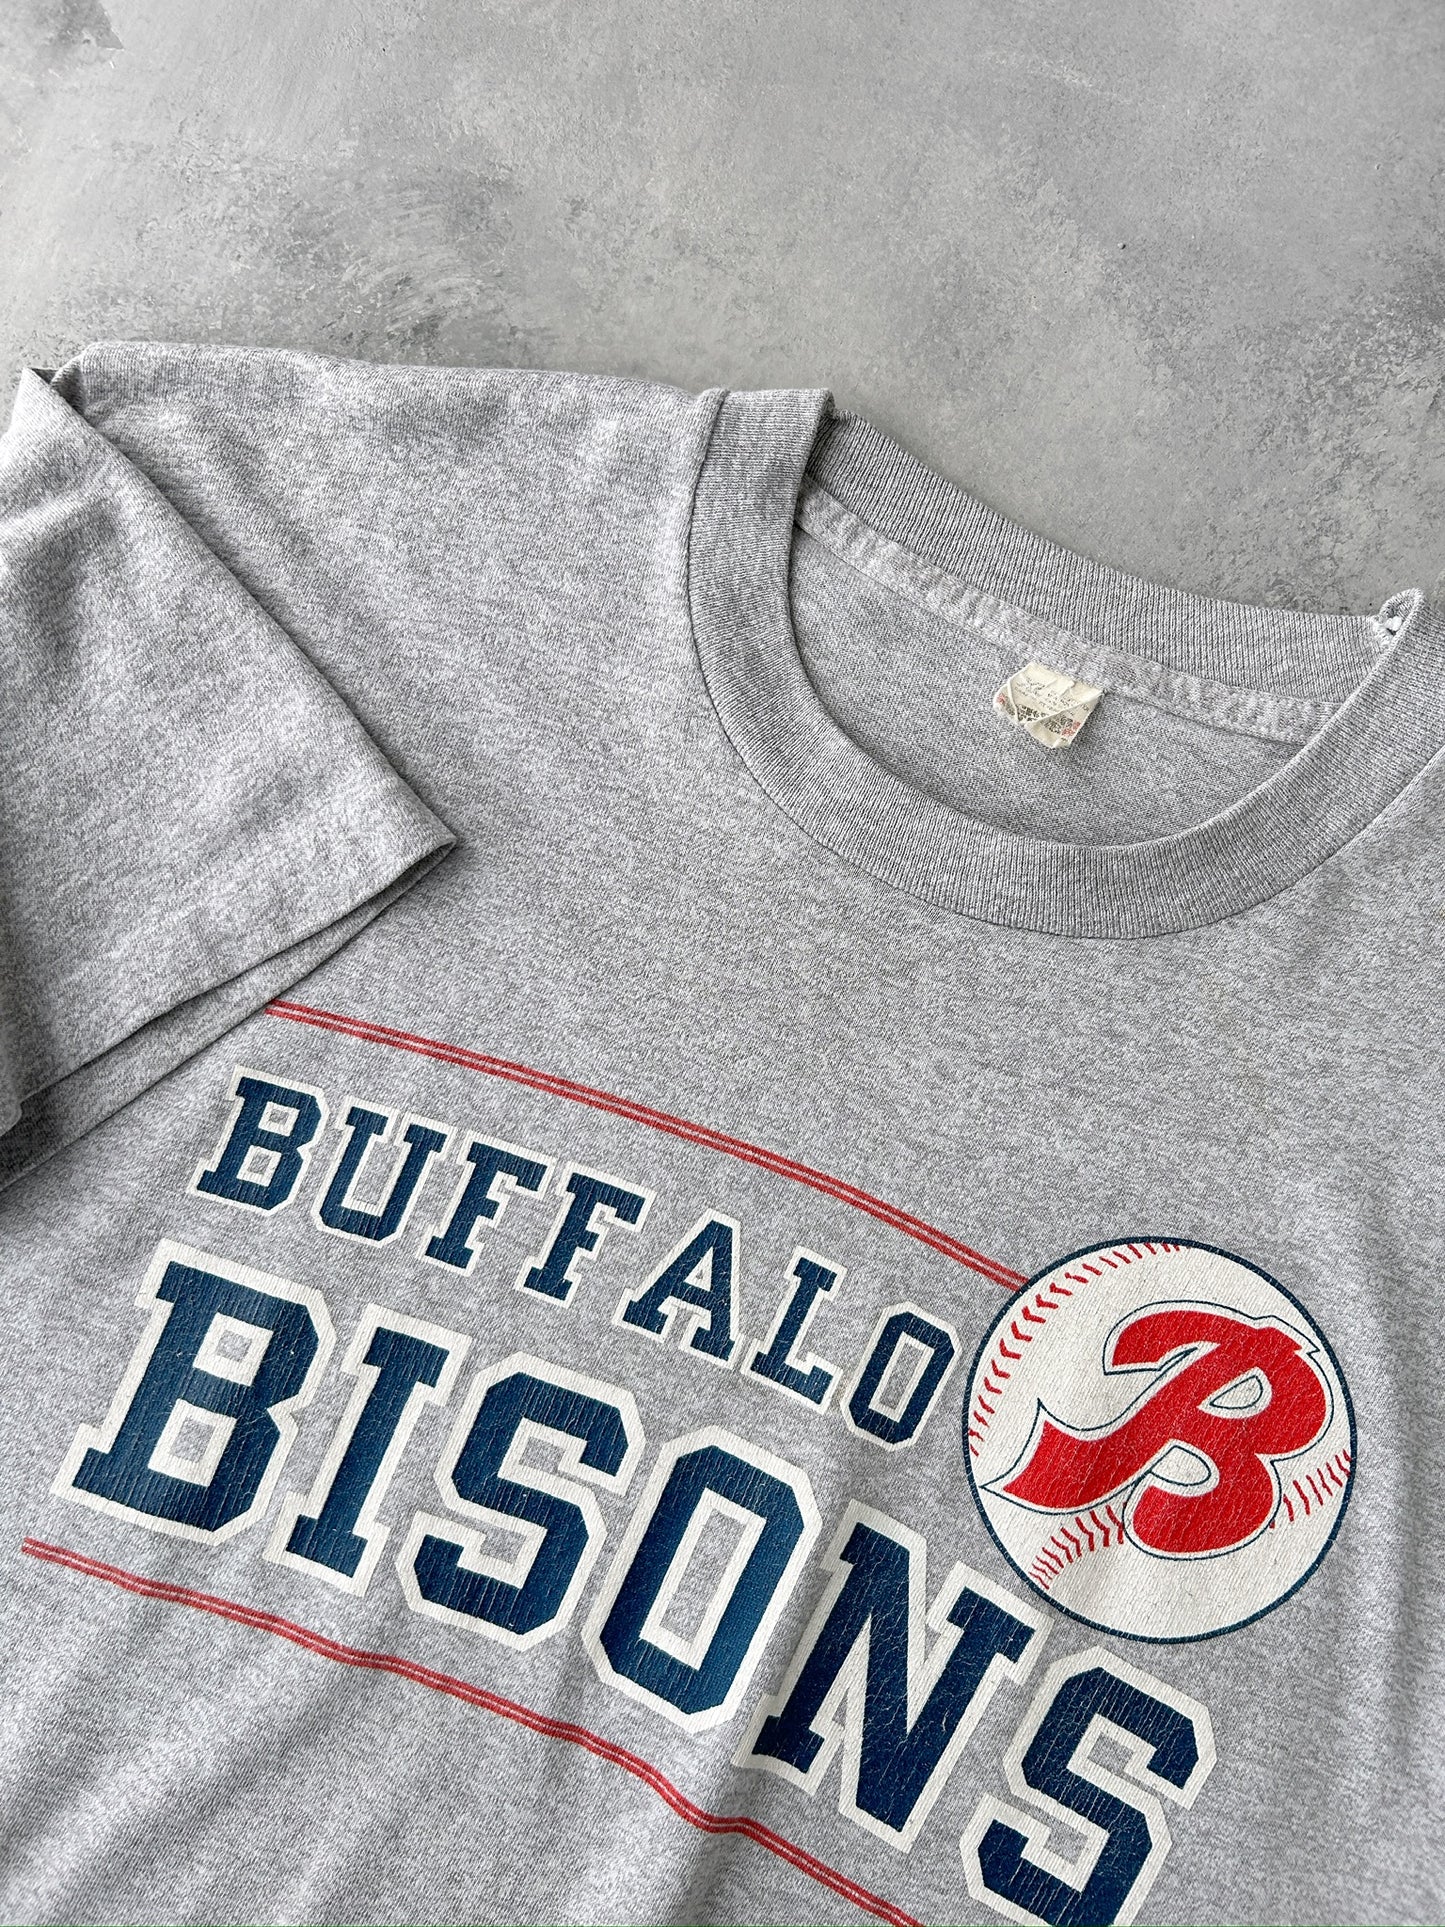 Buffalo Bisons T-Shirt 80's - Large